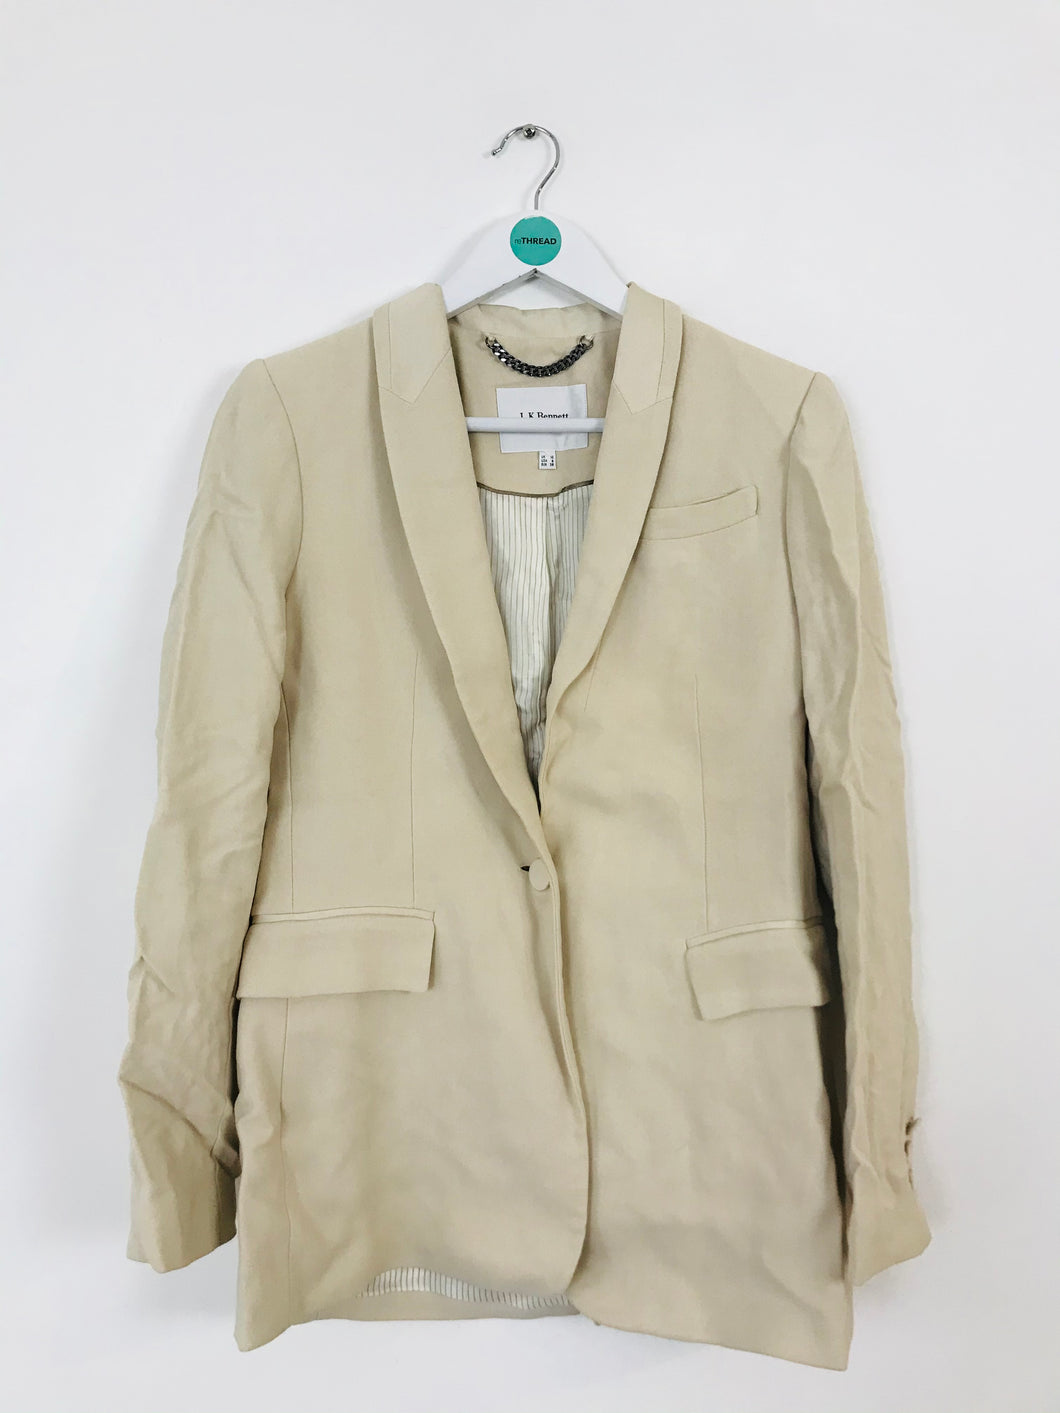 L.K.Bennett Women’s Suit Jacket Blazer | UK10 | Cream Beige